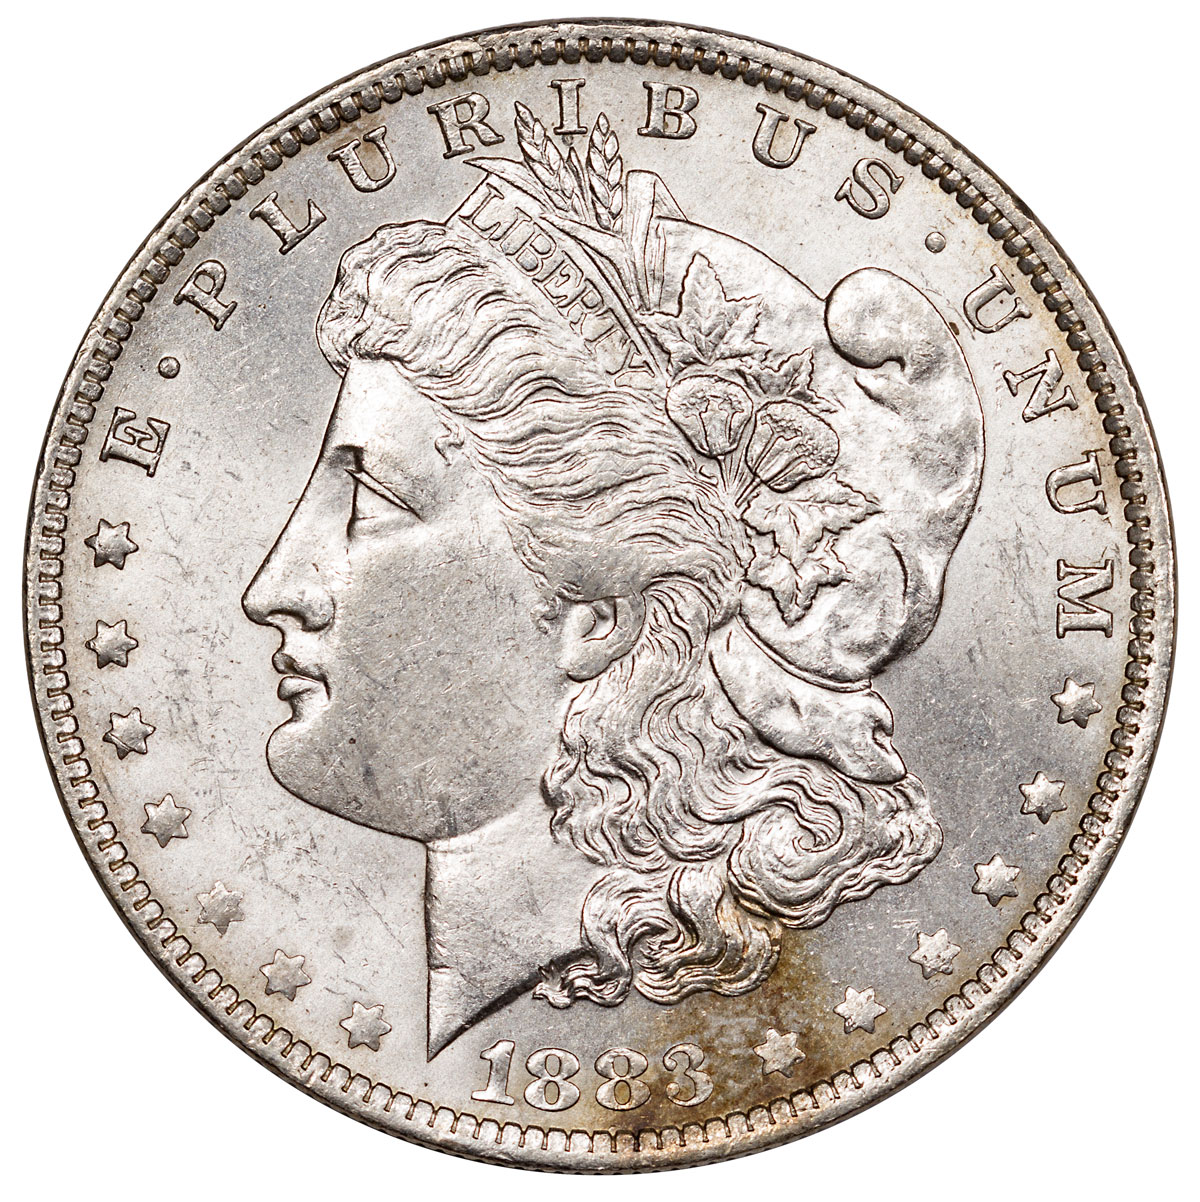 1883 silver dollar value book value